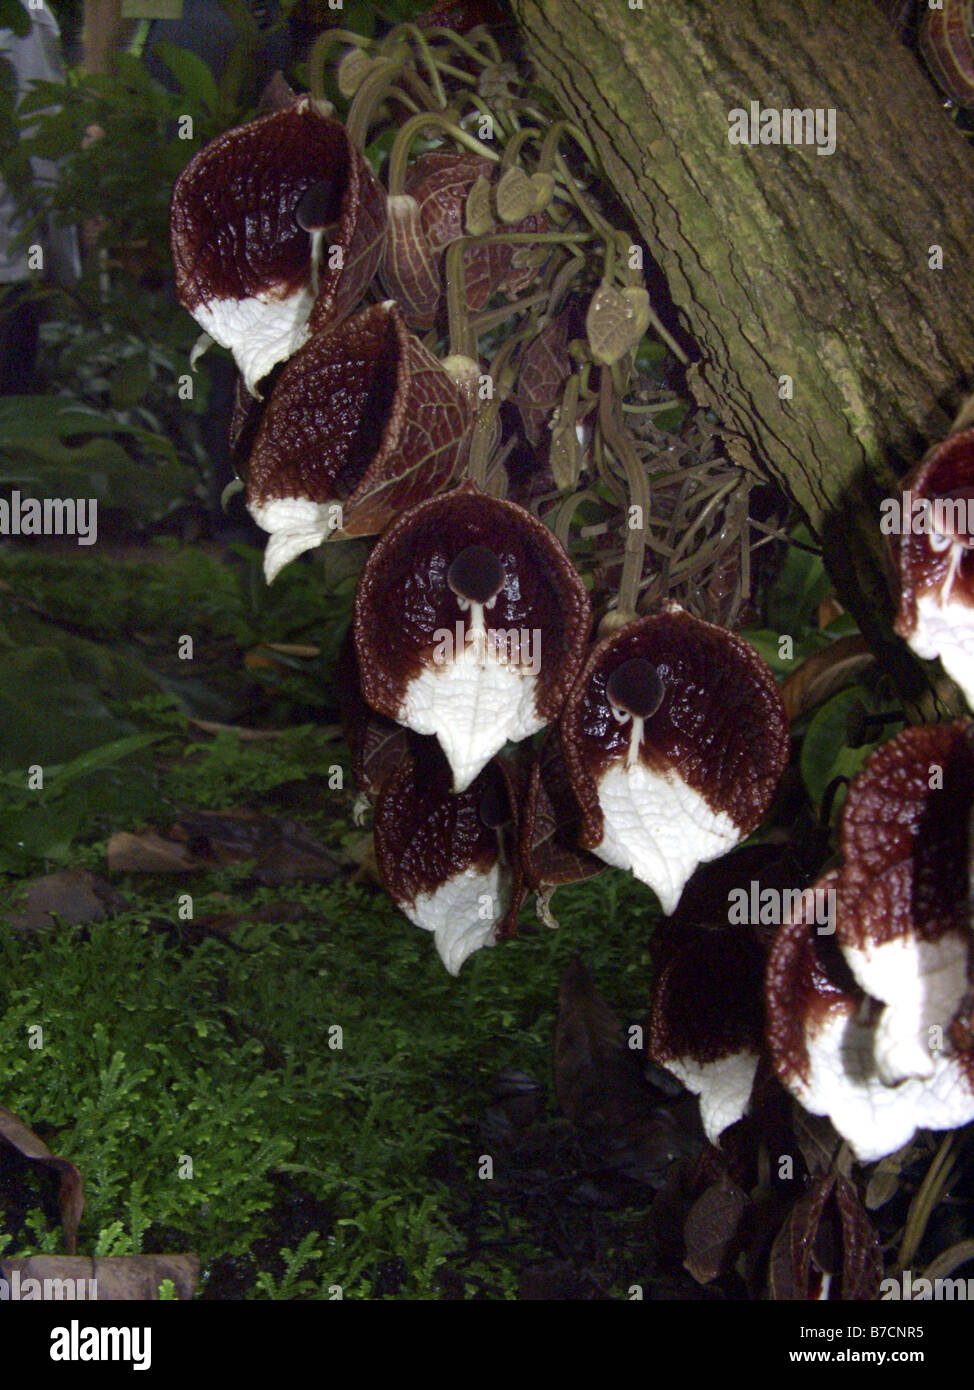 Tree Aristolochia (Aristolochia arborea), flowers with a mushroom dummy Stock Photo